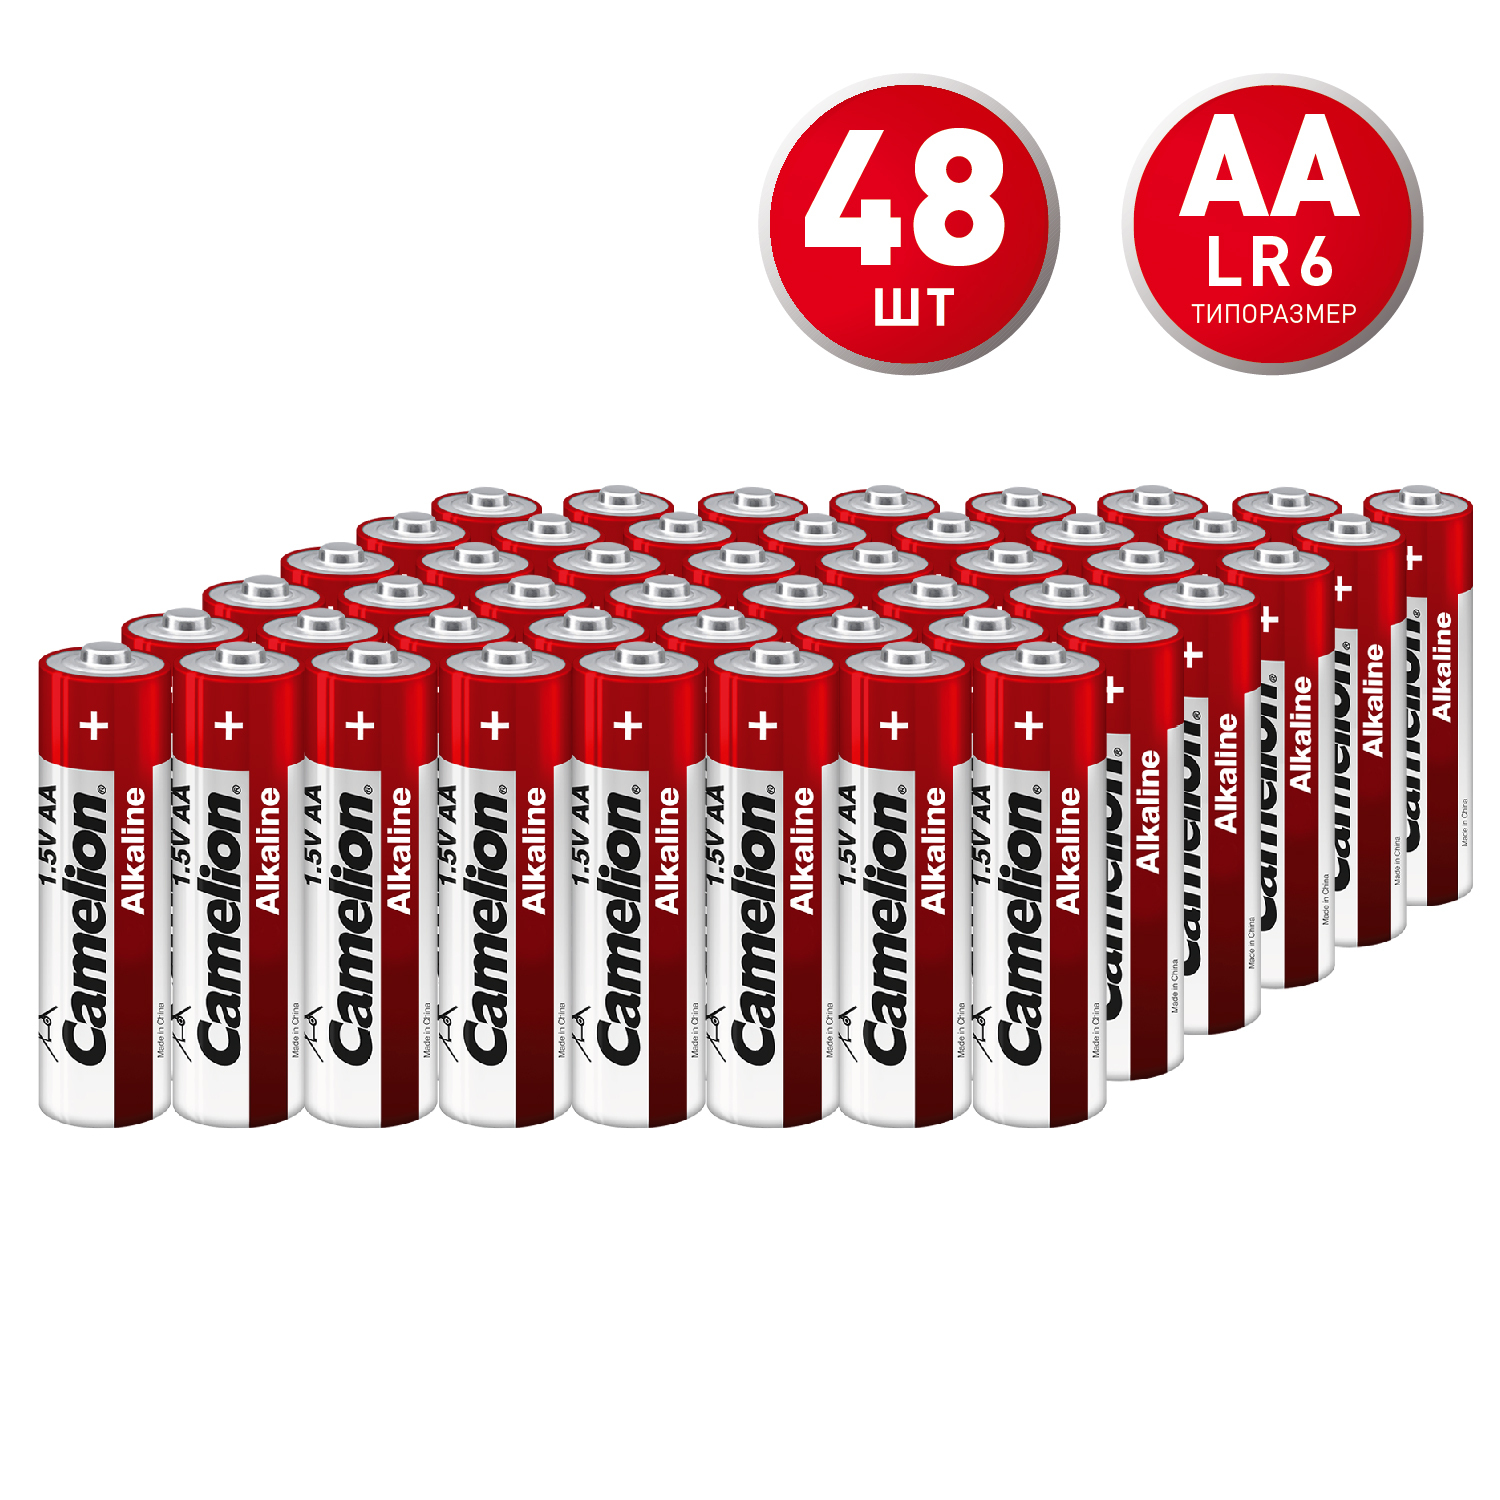 Батарейка Camelion Plus (LR6-BP4) АА пальчиковая LR6 1,5 В (48 шт.) батарейка duracell optimum б0056020 аа пальчиковая lr6 1 5 в 4 шт